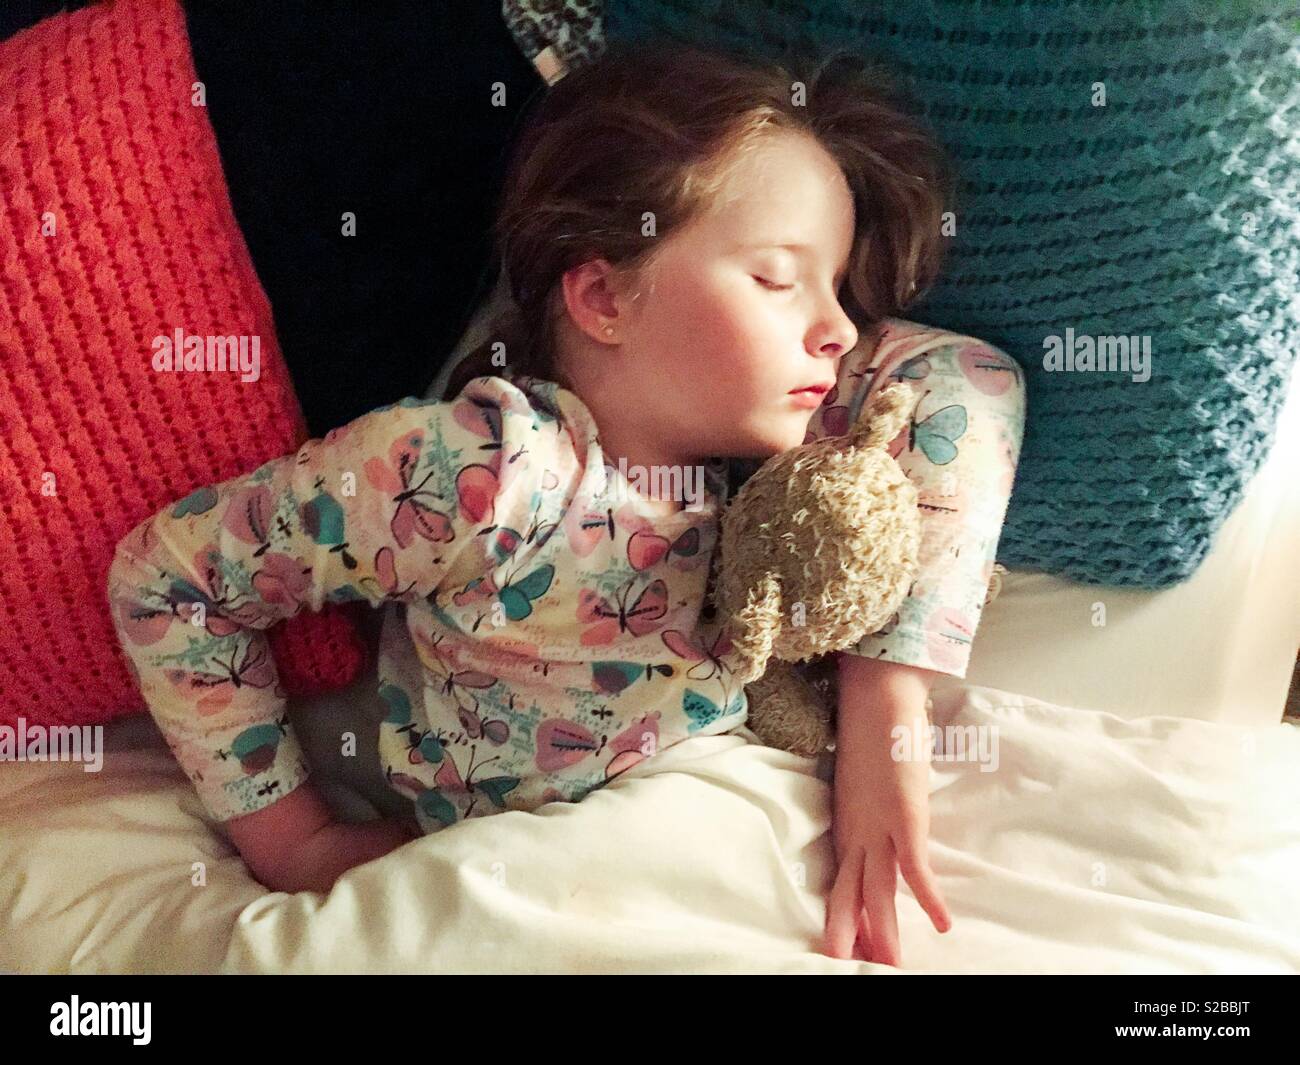 Young girl asleep in bed cuddling teddy bear Stock Photo